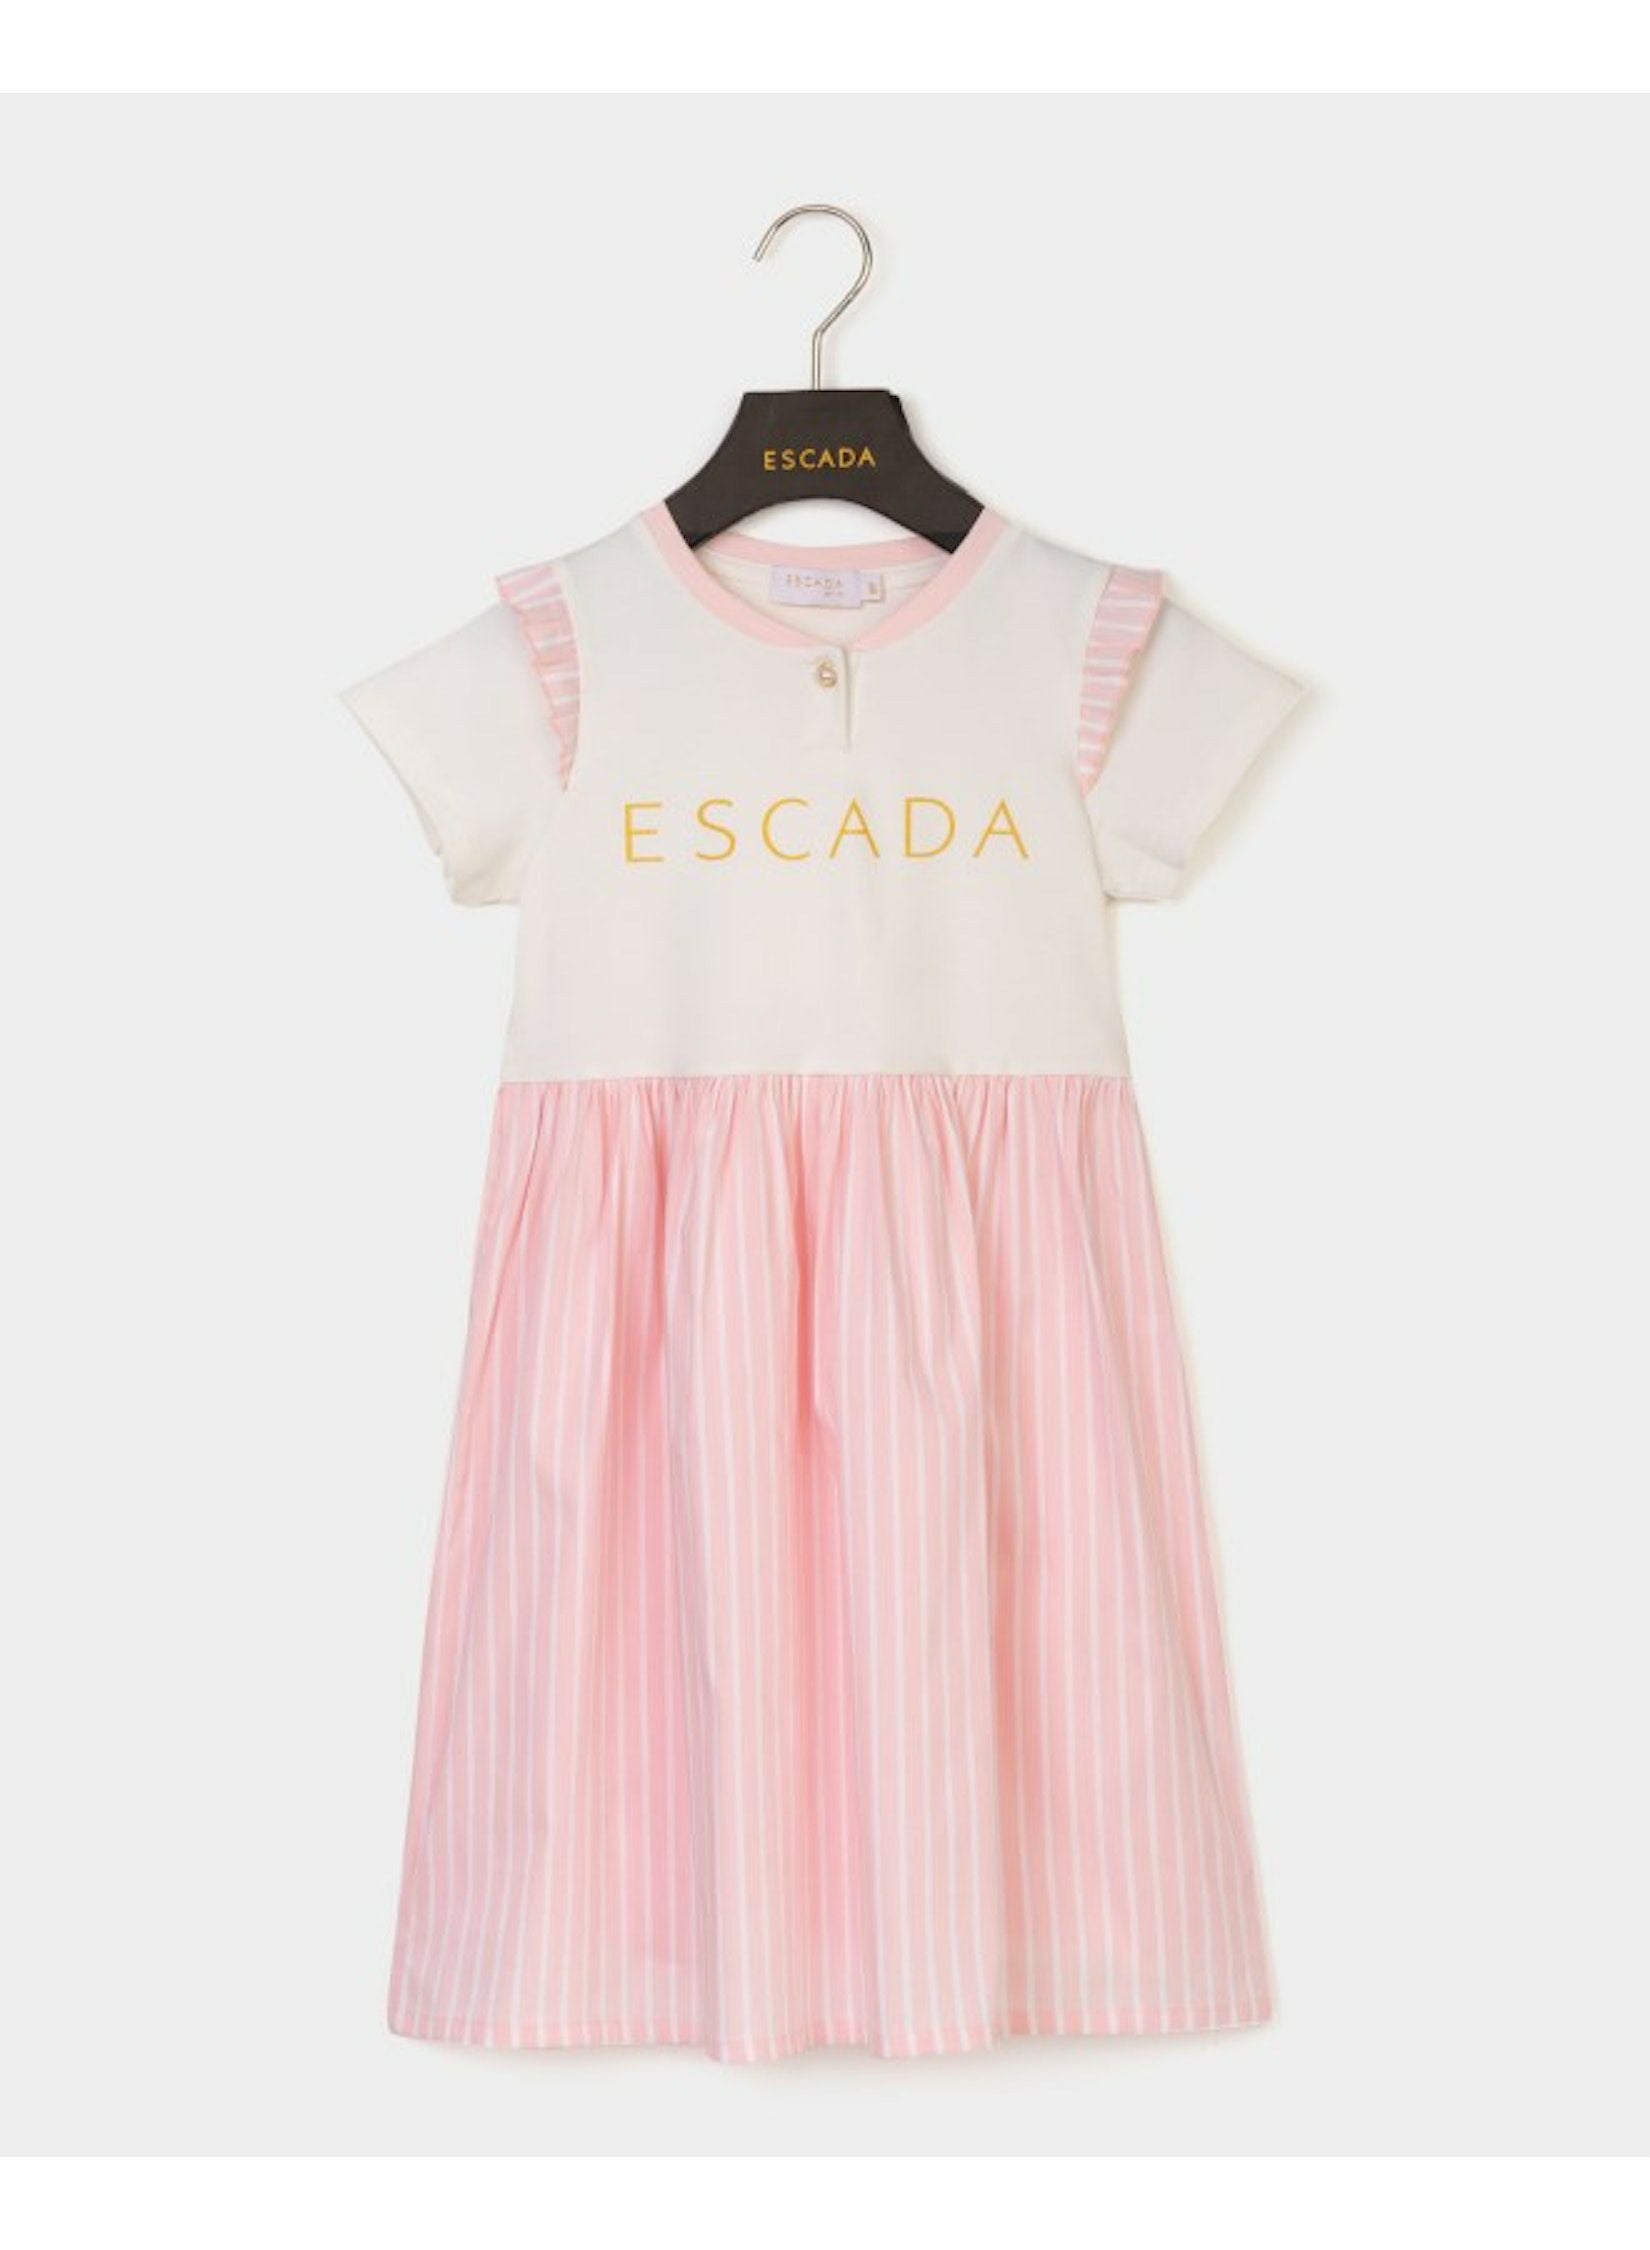 ESCADA S/S STRIPED DRESS